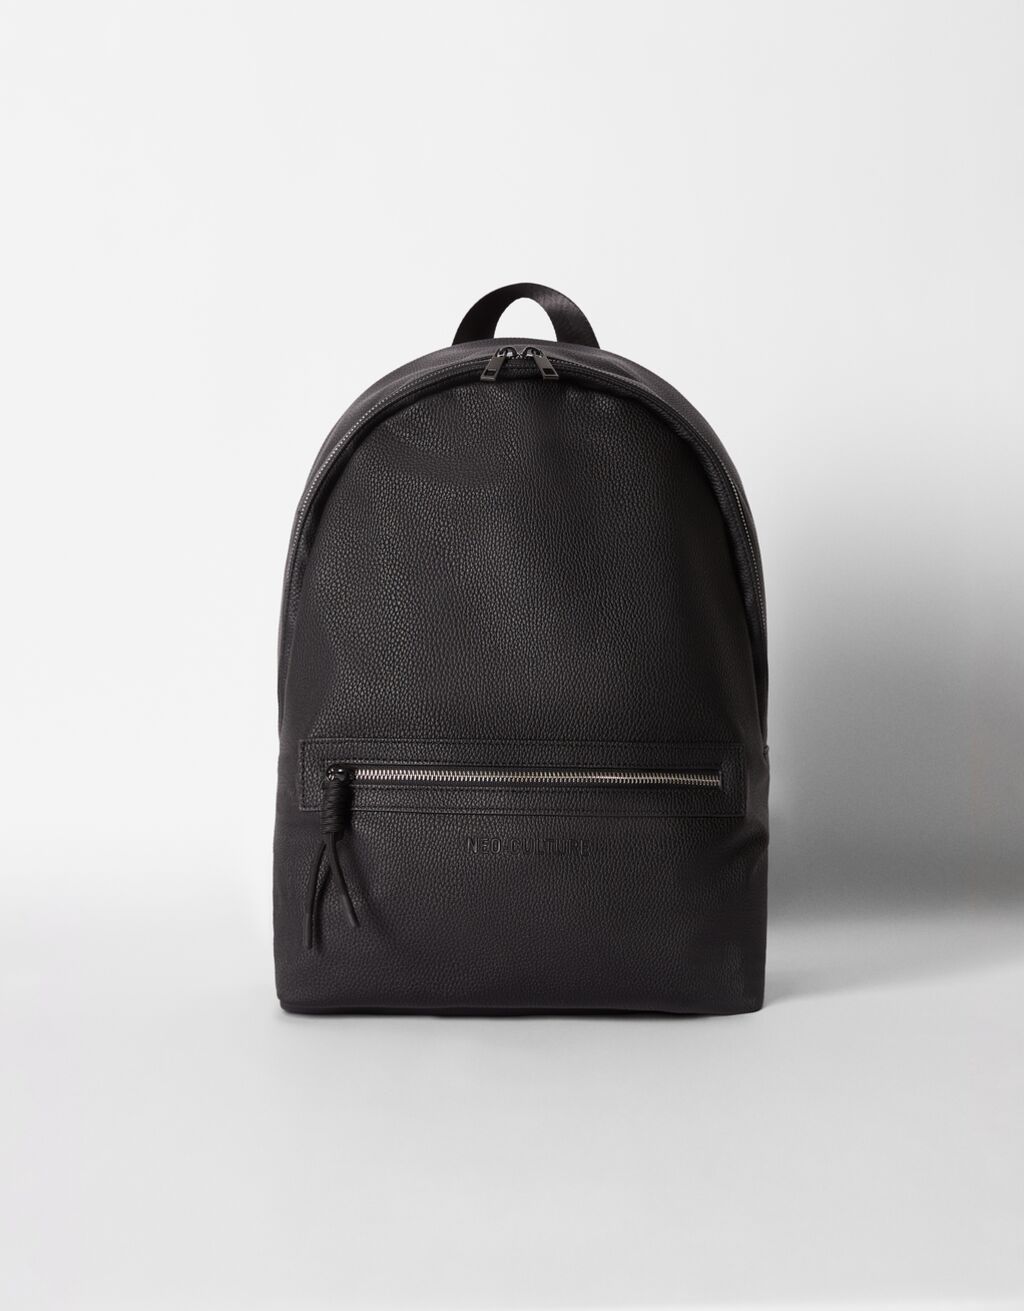 Monochrome backpack